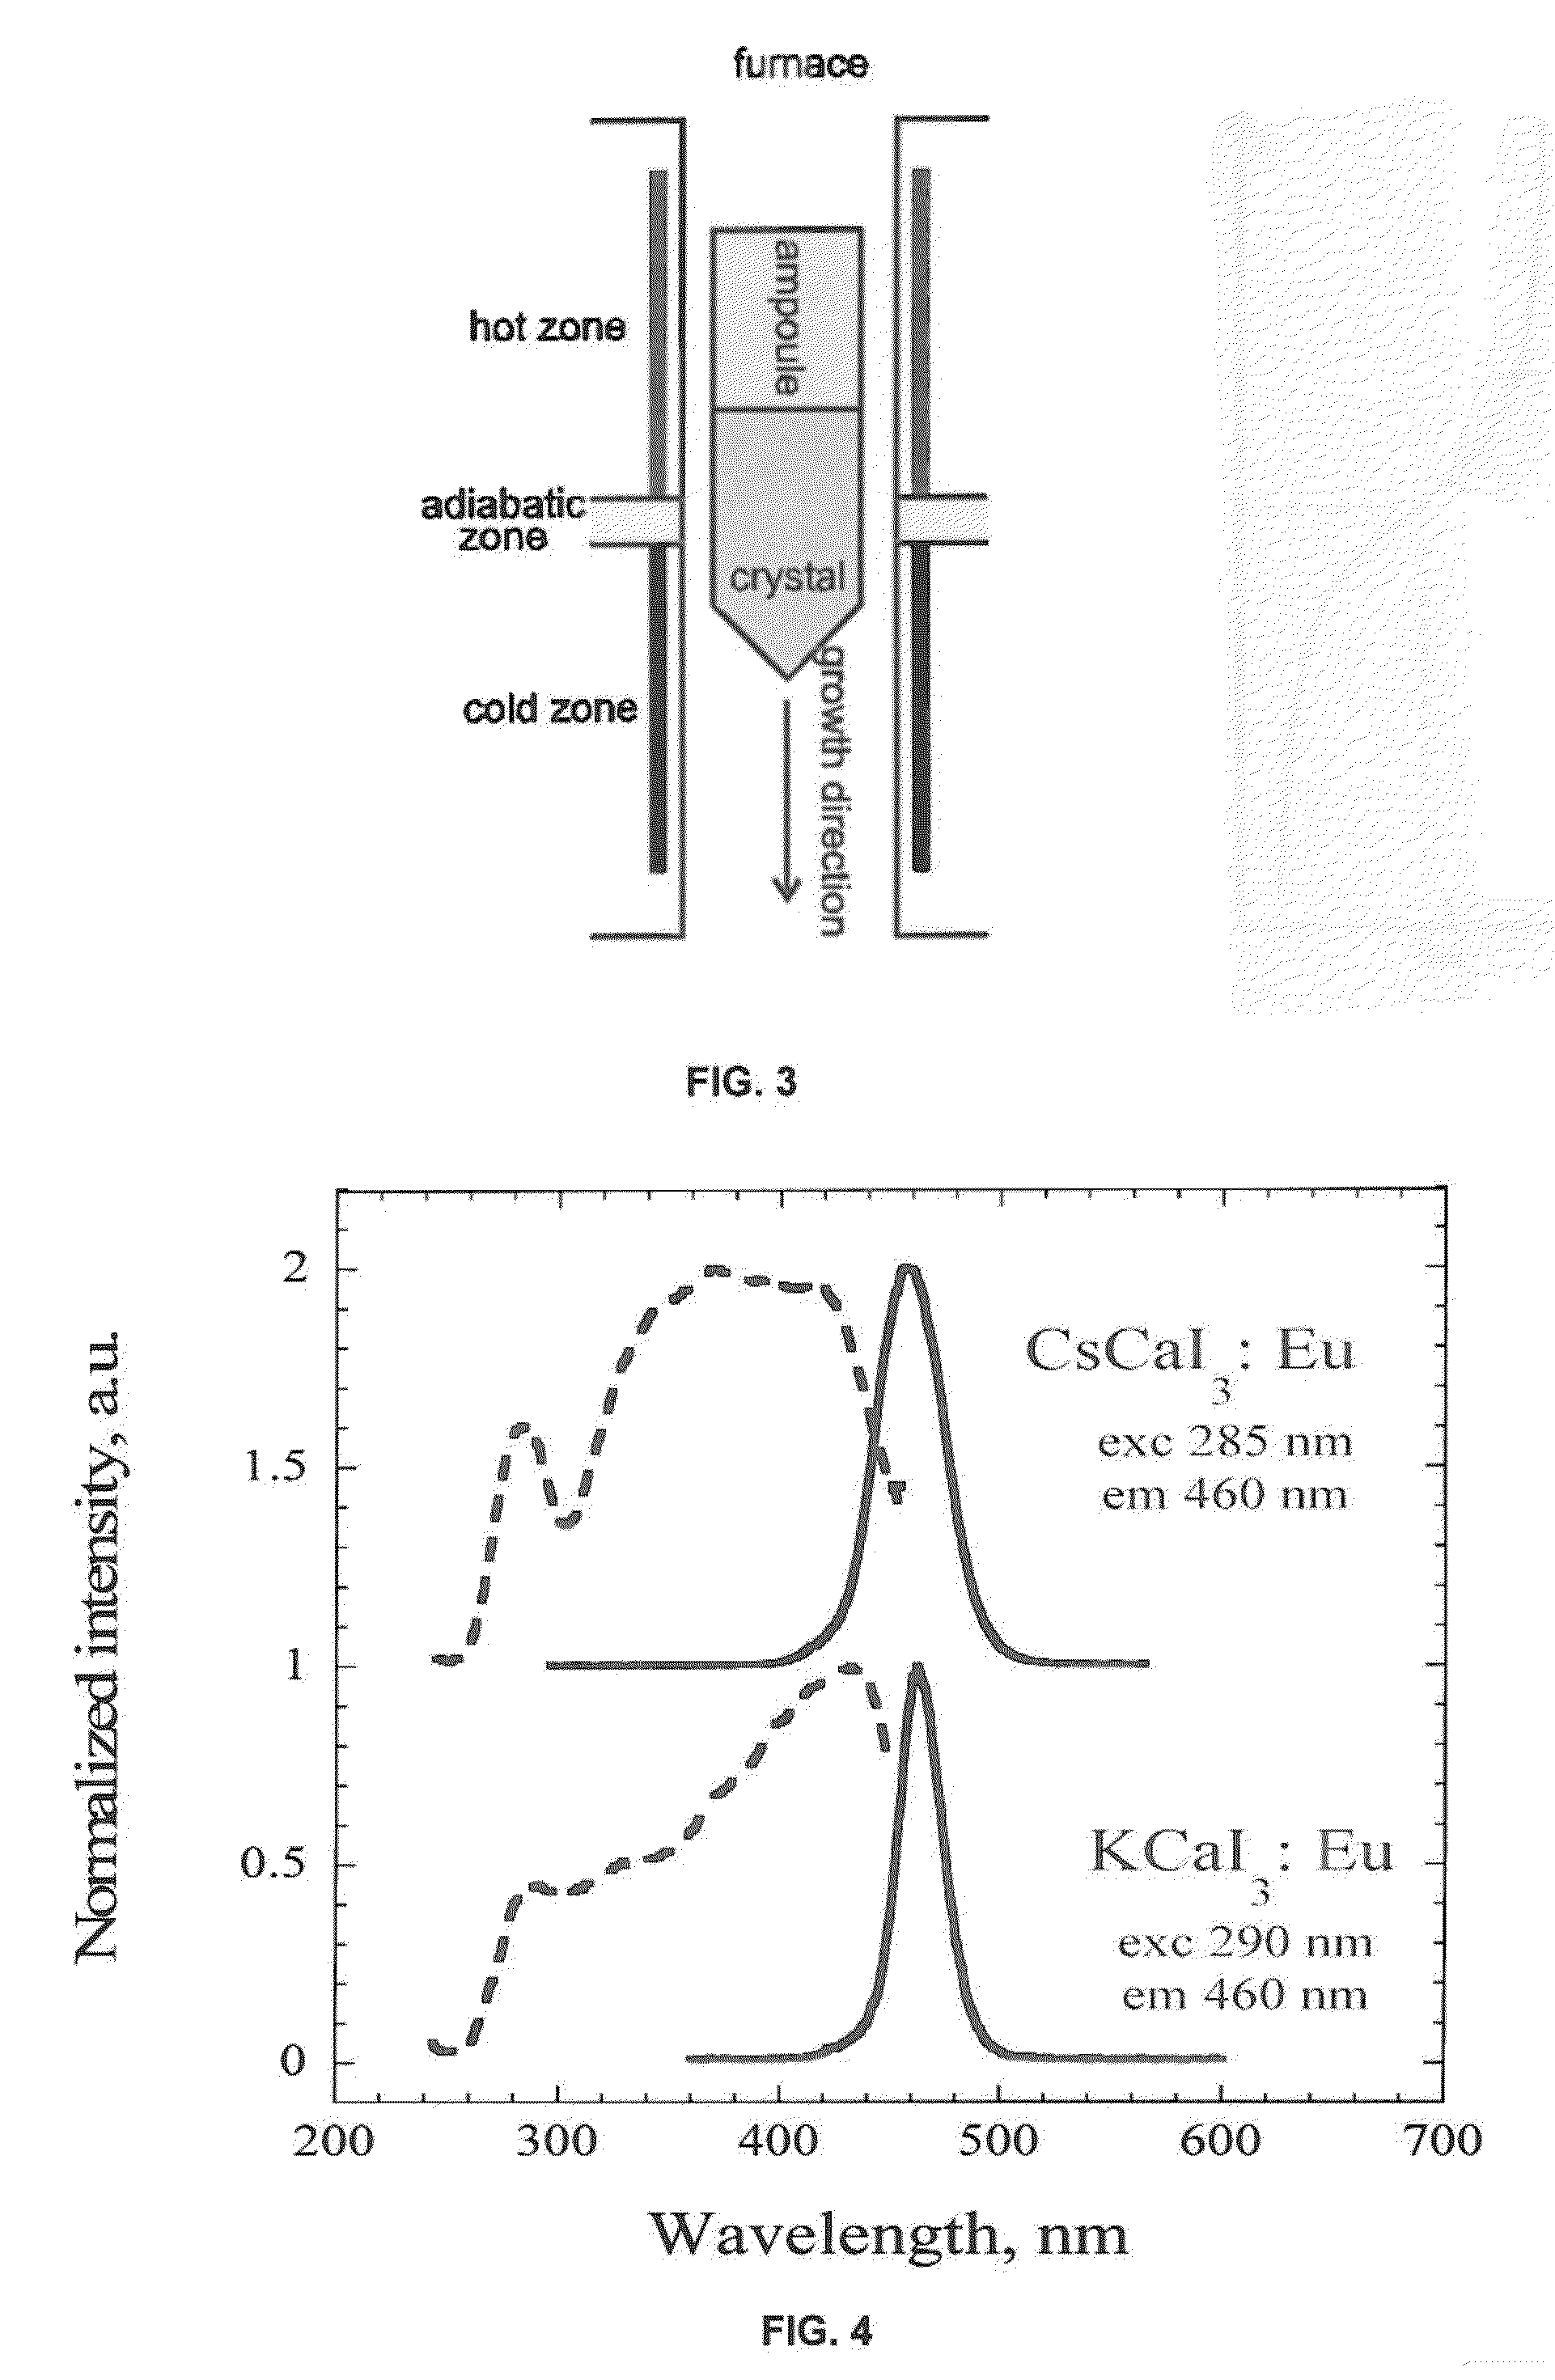 Chloride, bromide and iodide scintillators with europium doping